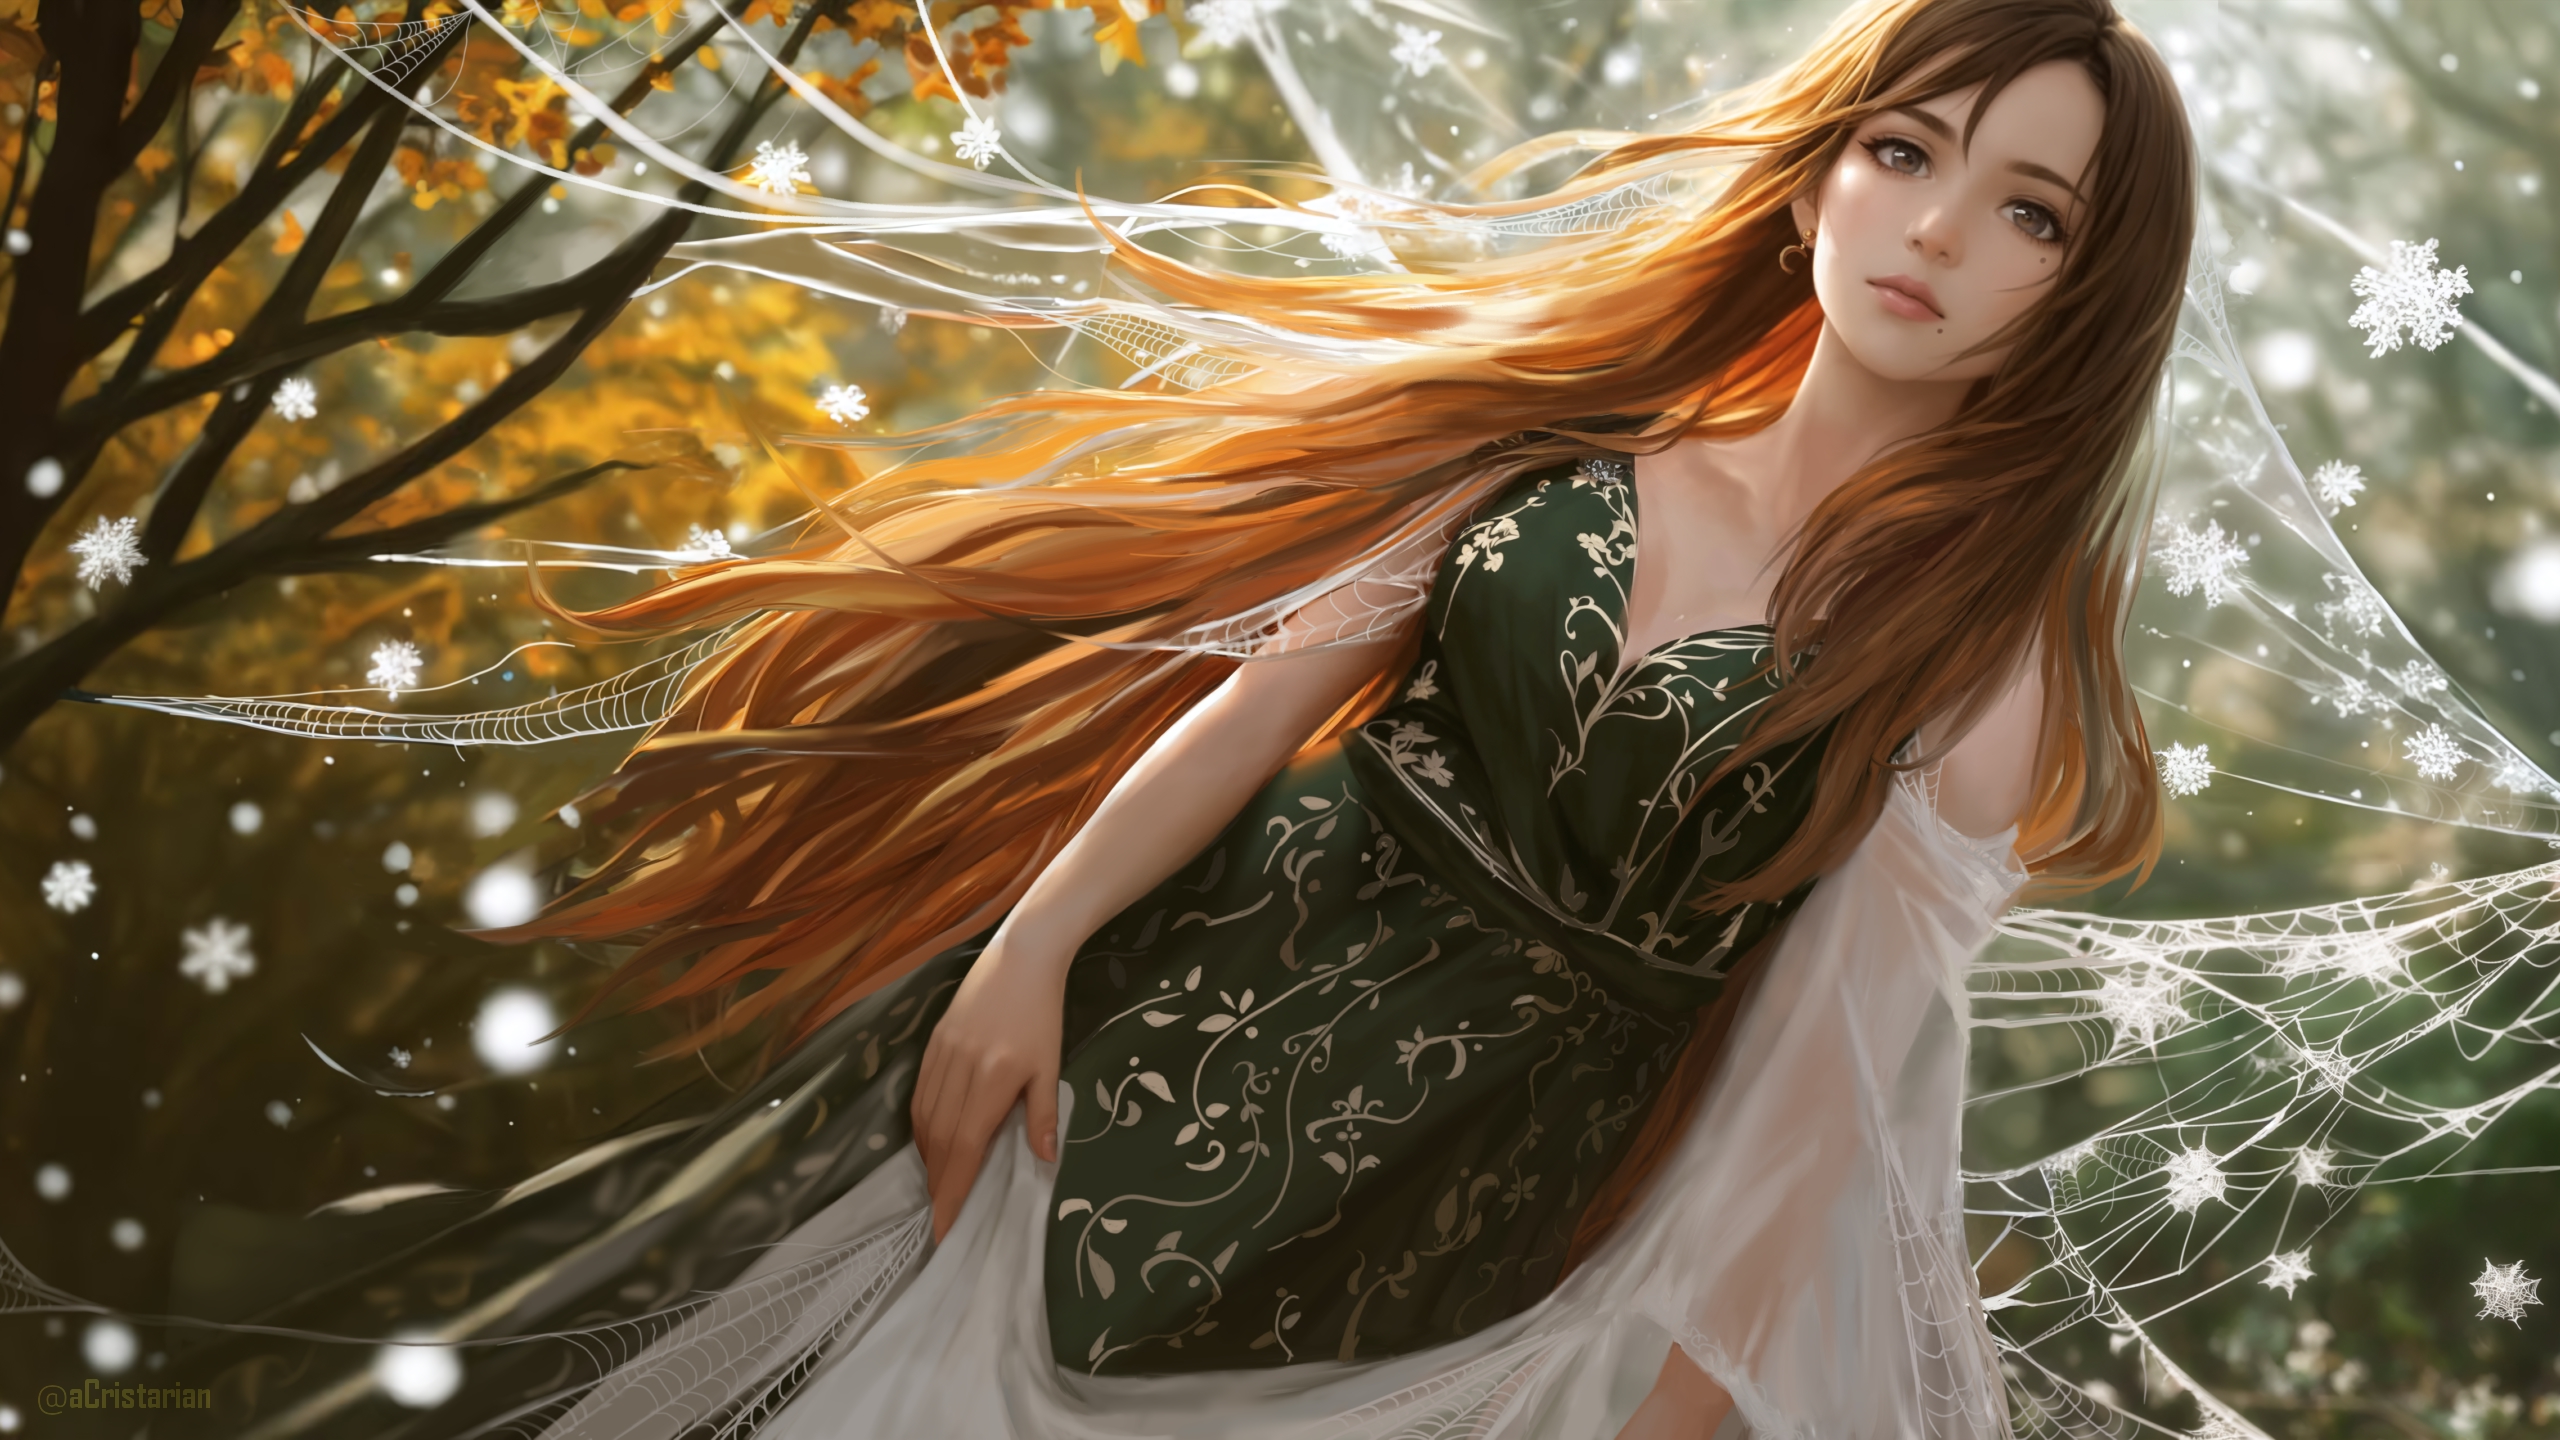 Anime 2560x1440 green spiderwebs long hair brunette trees green dress moles Ice crystals women outdoors artwork fantasy girl